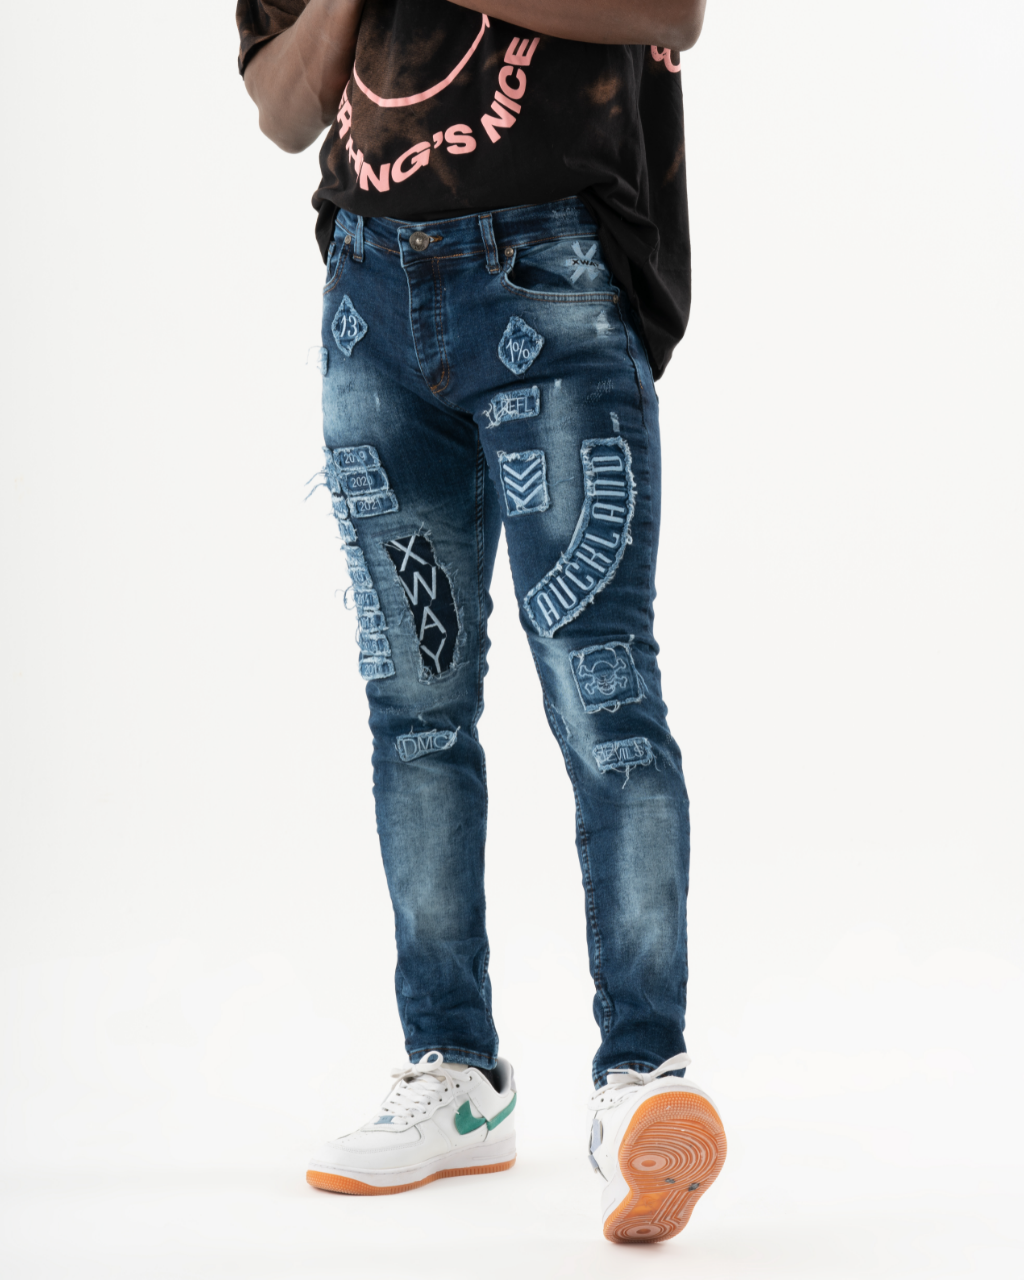 A man in INJUN | BLUE streetwear jeans and a t-shirt.